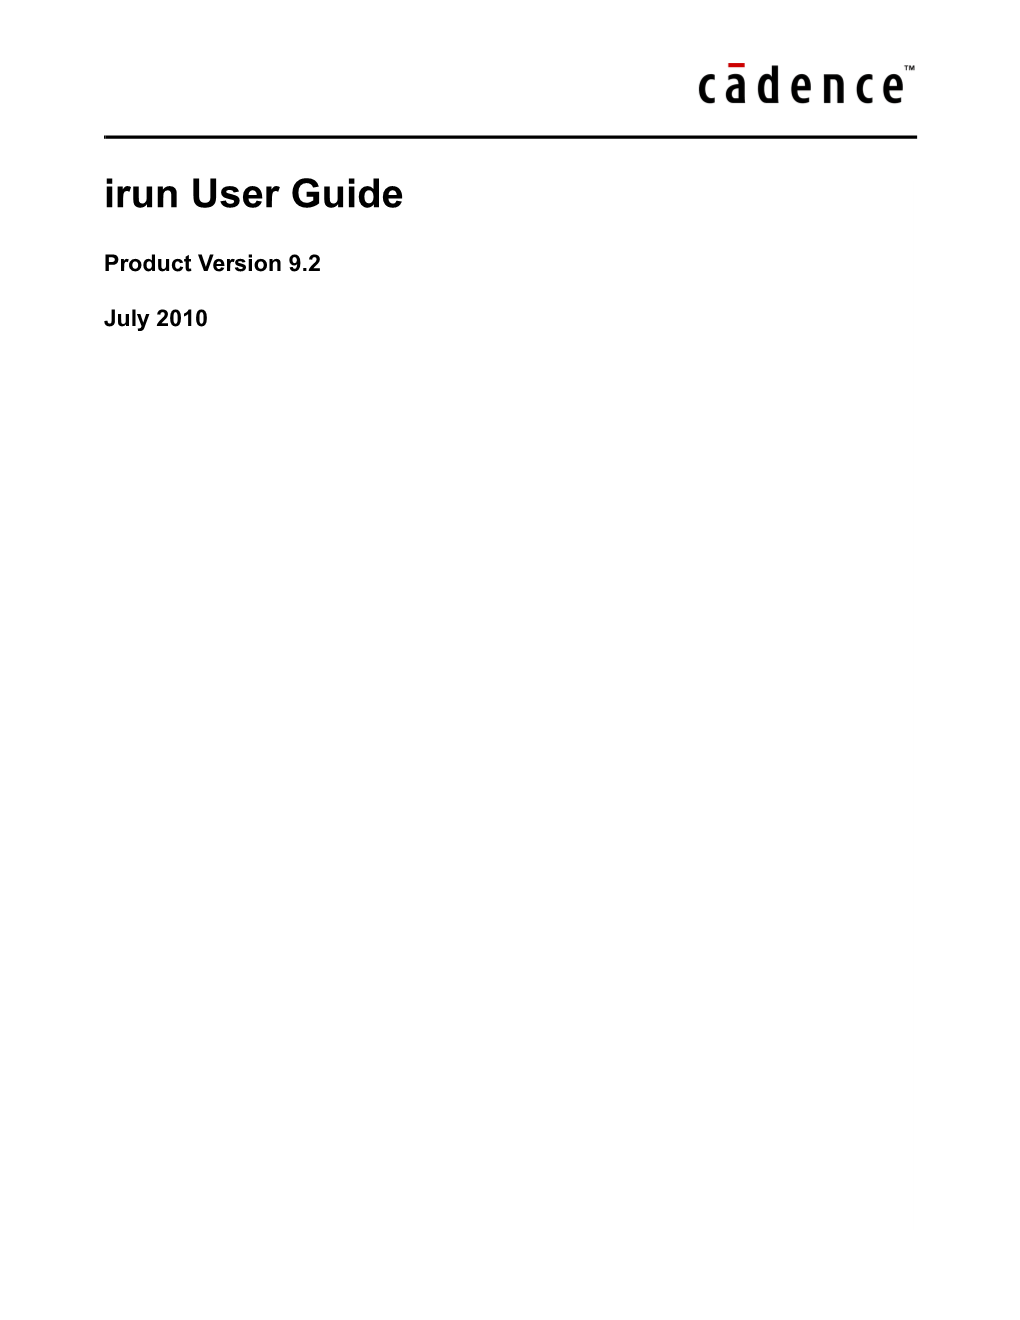 Irun User Guide